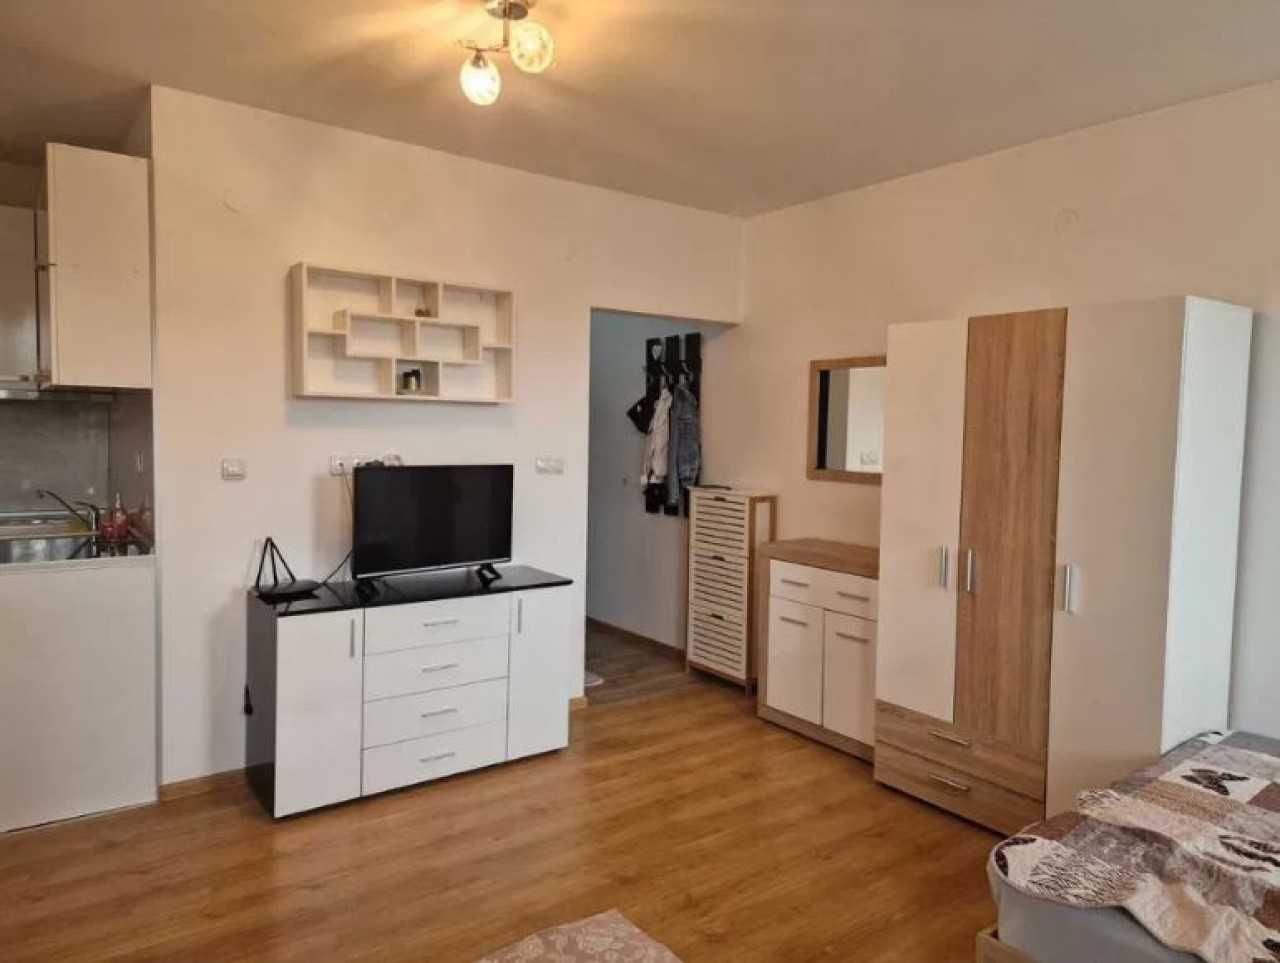 Едностаен апартамент в Каменица 1